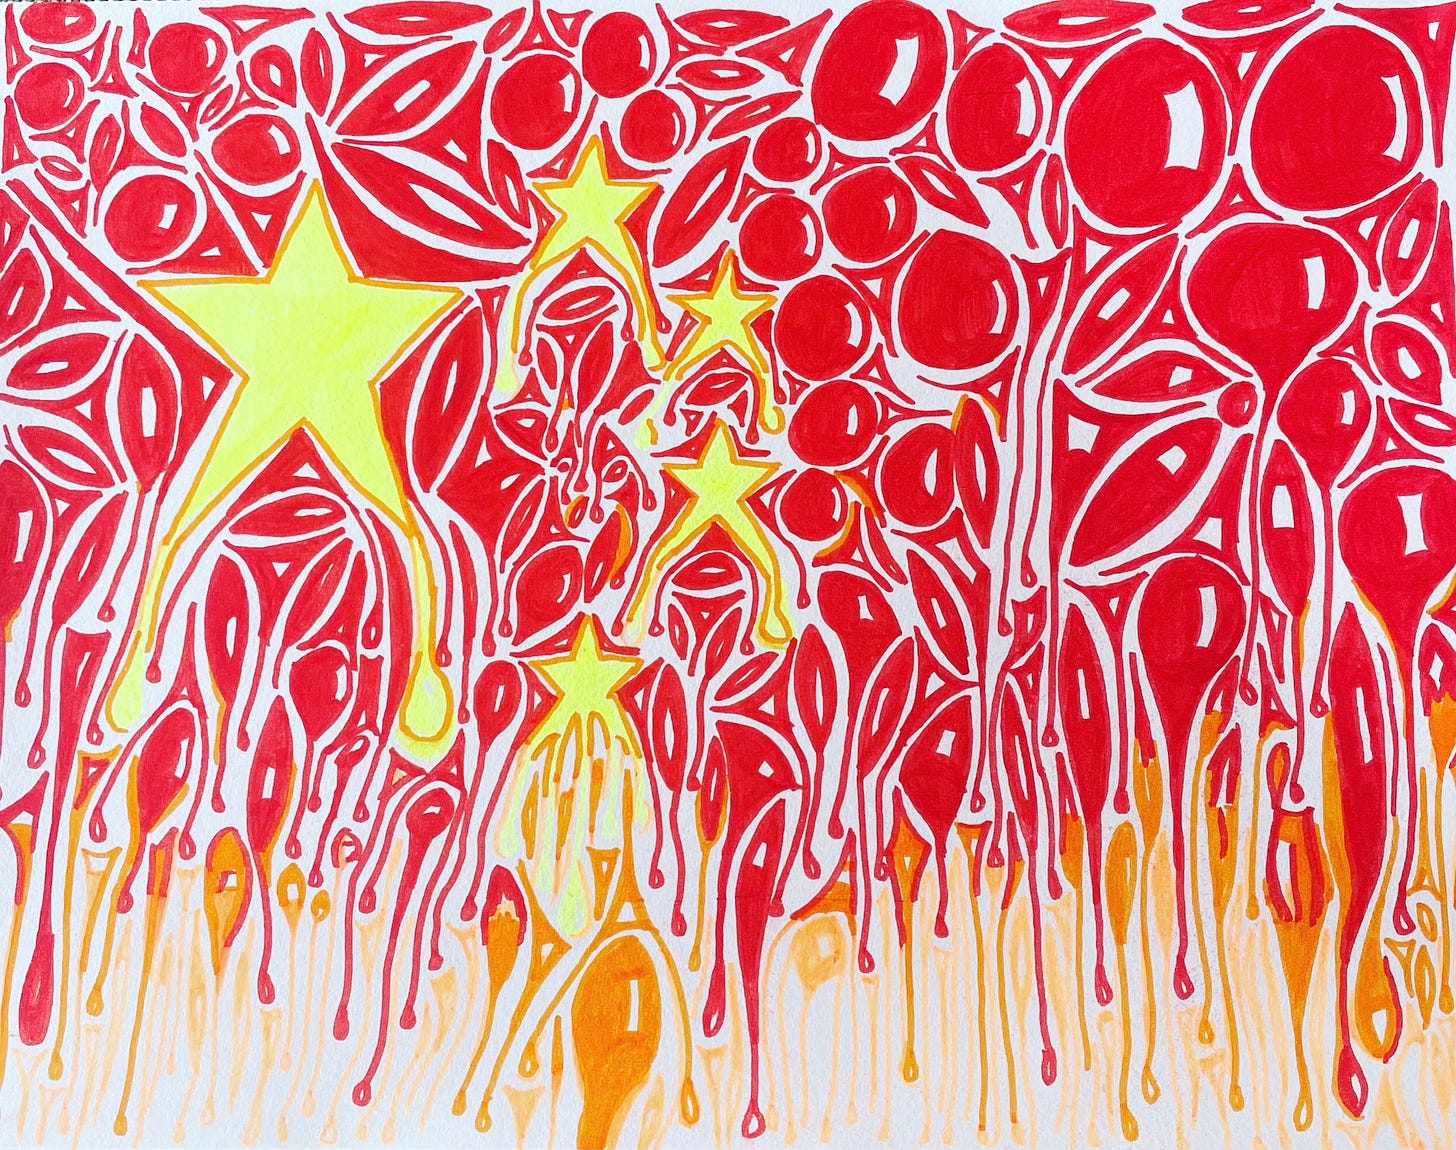 Graffiti art of Chinese flag denoting bubbles and meltdown